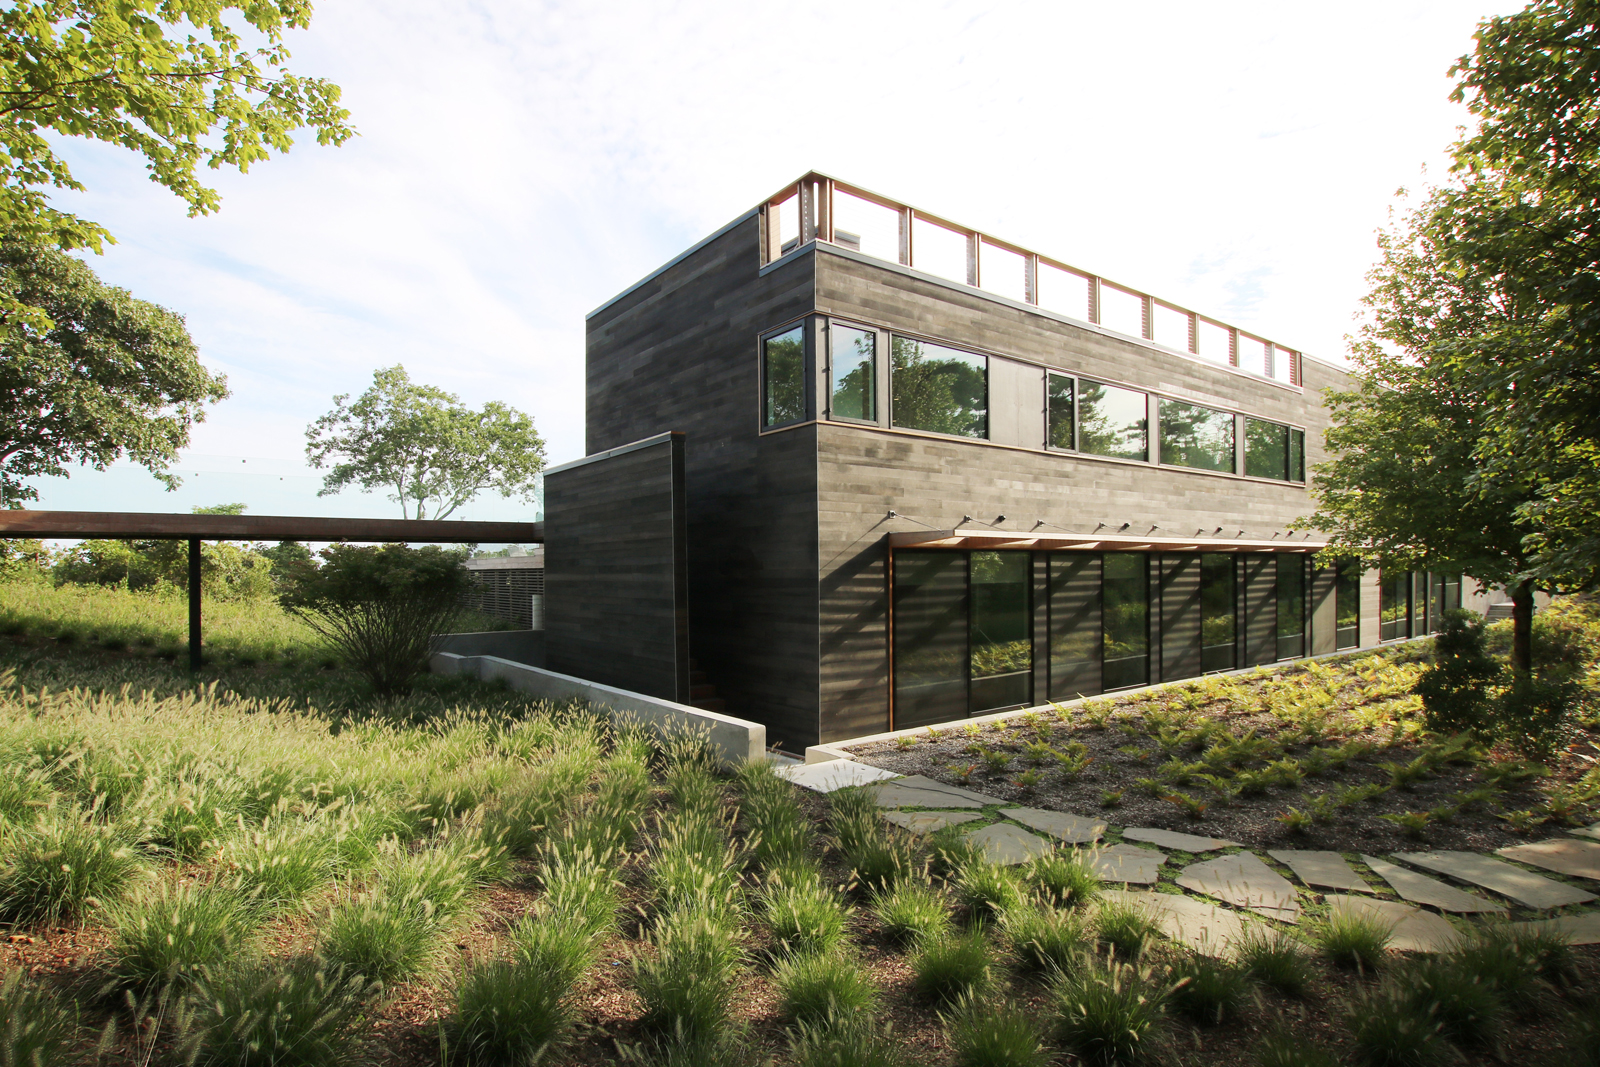 res4-resolution-4-architecture-modern-modular-house-prefab-amagansett-addition-exterior-facade-perspective-view-landscape.jpg